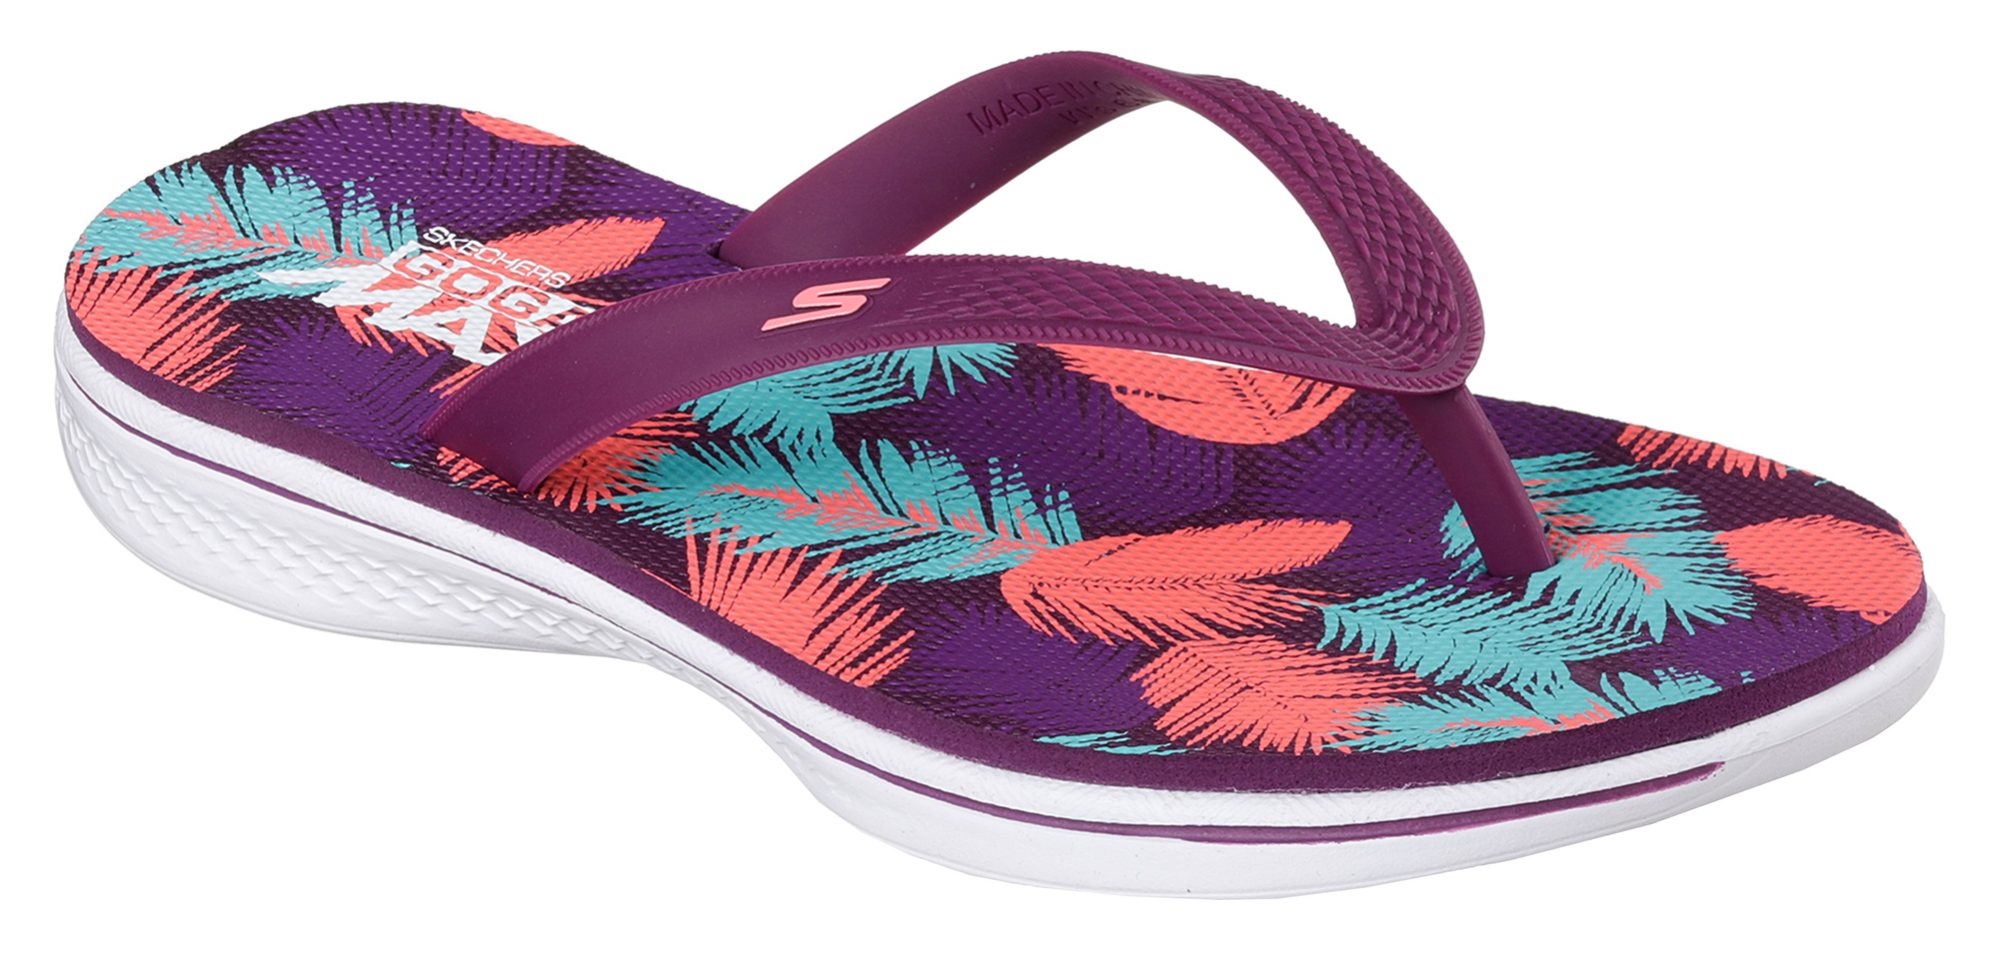 Leeds Awaken Serrated Skechers H2 Goga - Lagoon Purple / Pink 14680 PRPK - Toe Post Sandals -  Humphries Shoes